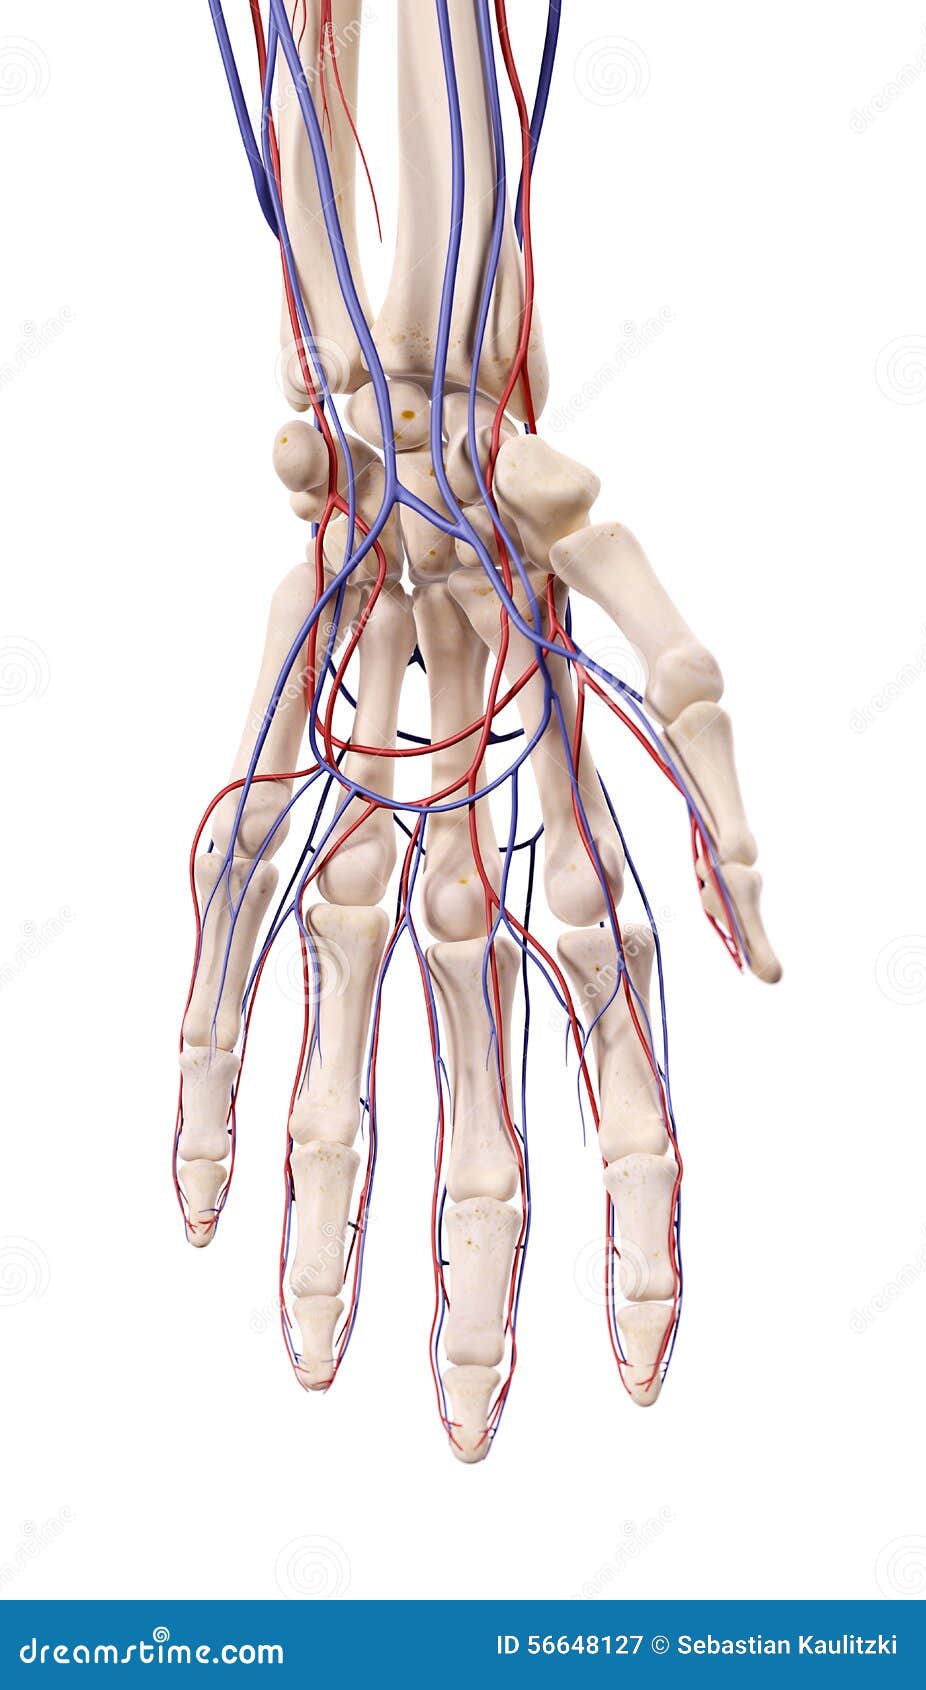 The hand blood vessels stock illustration. Illustration of human - 56648127